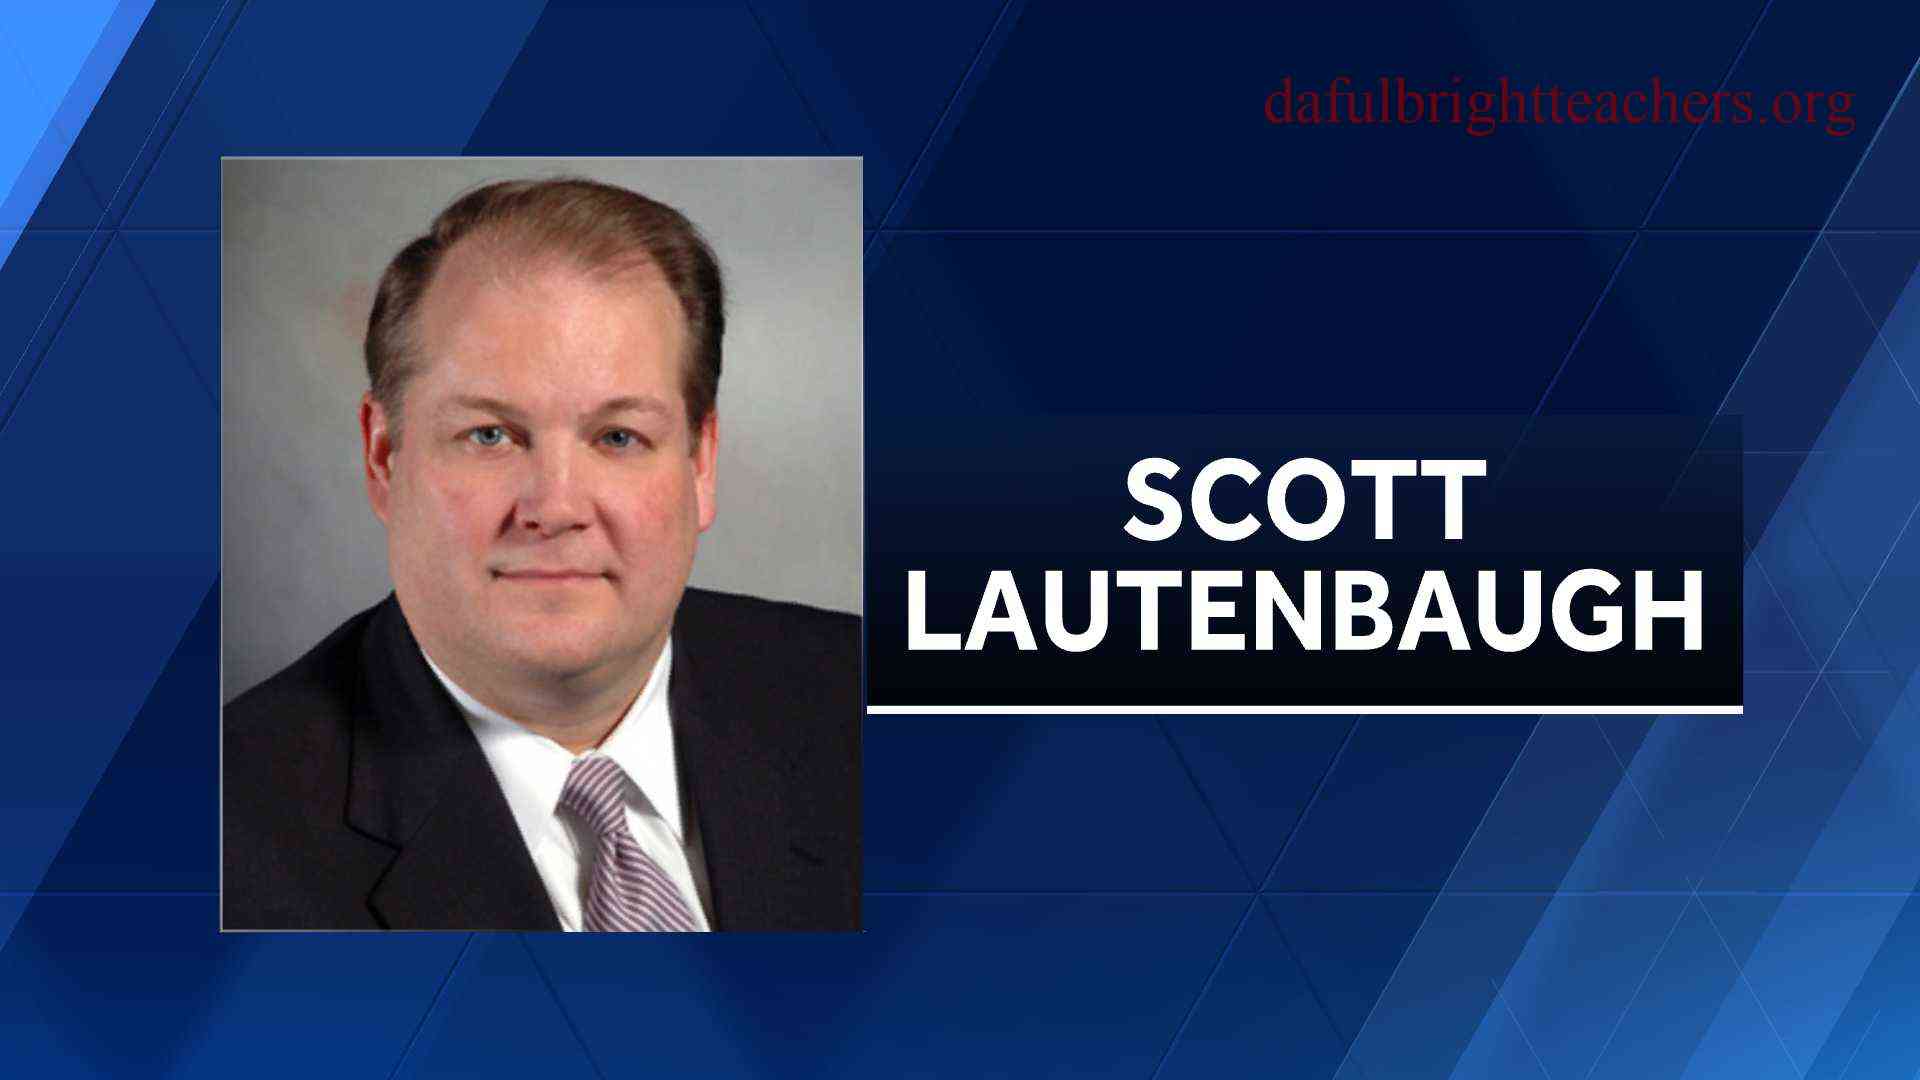 Scott Lautenbaugh obituary: Former Nebraska State Senator and Douglas County Election Commissioner passes away at 59